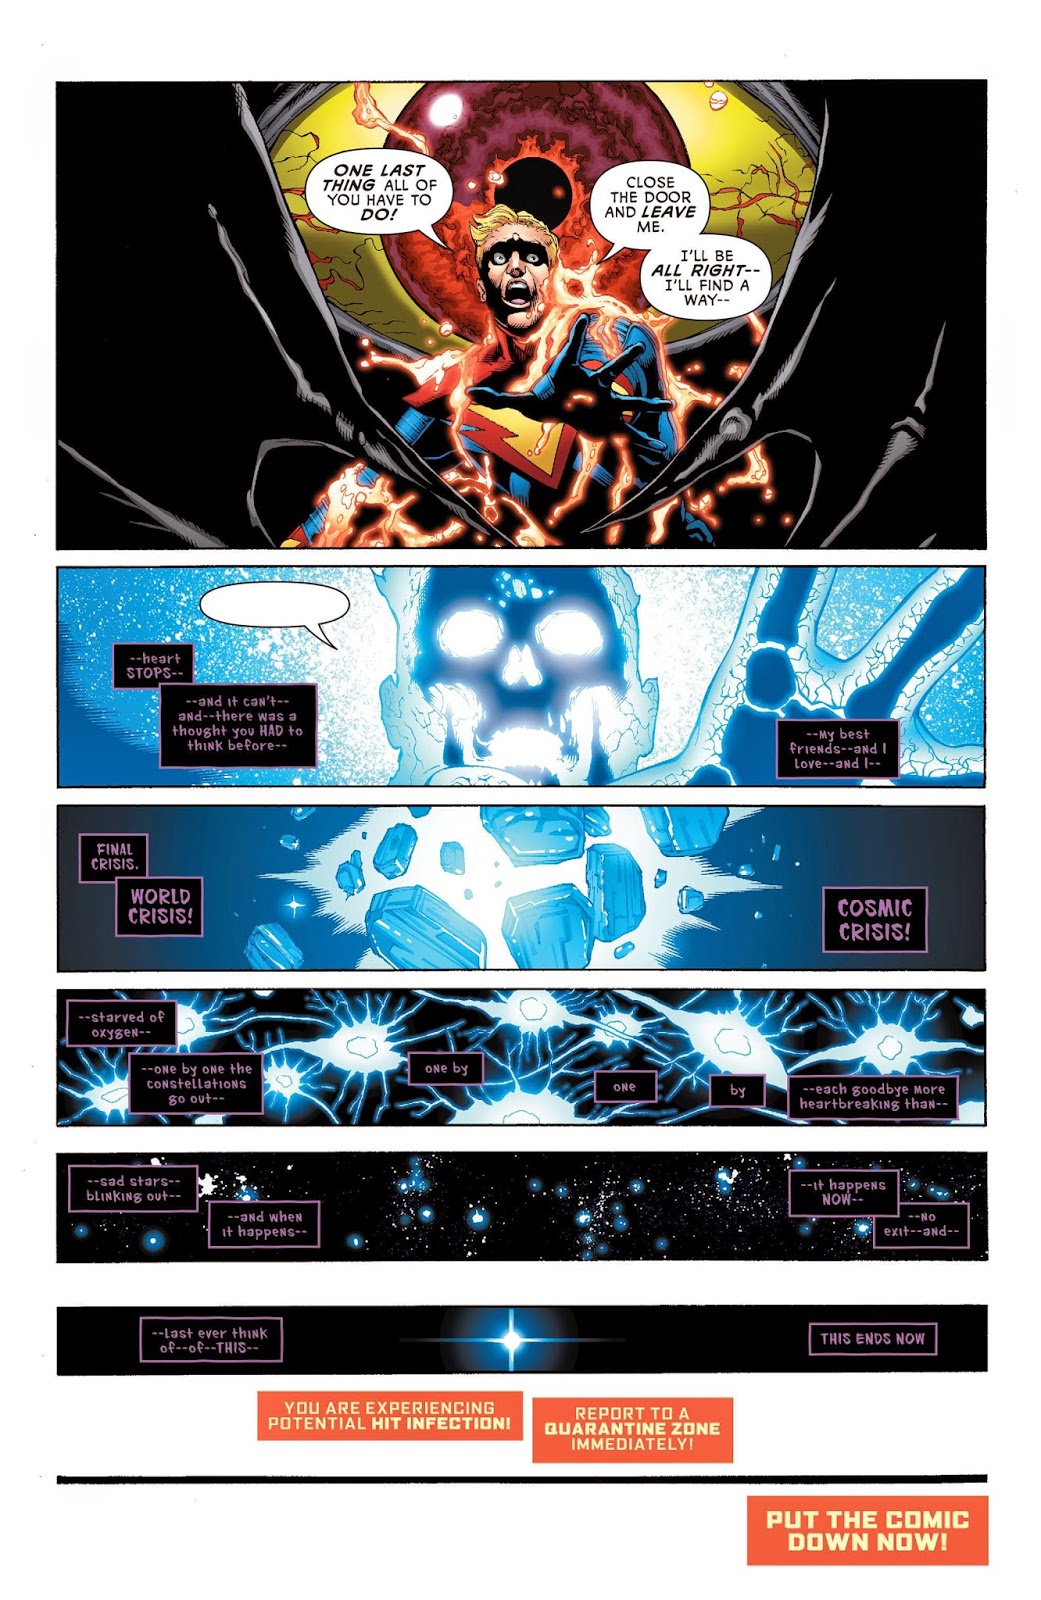 My Hero Academia: World Heroes' Mission – Multiversity Comics